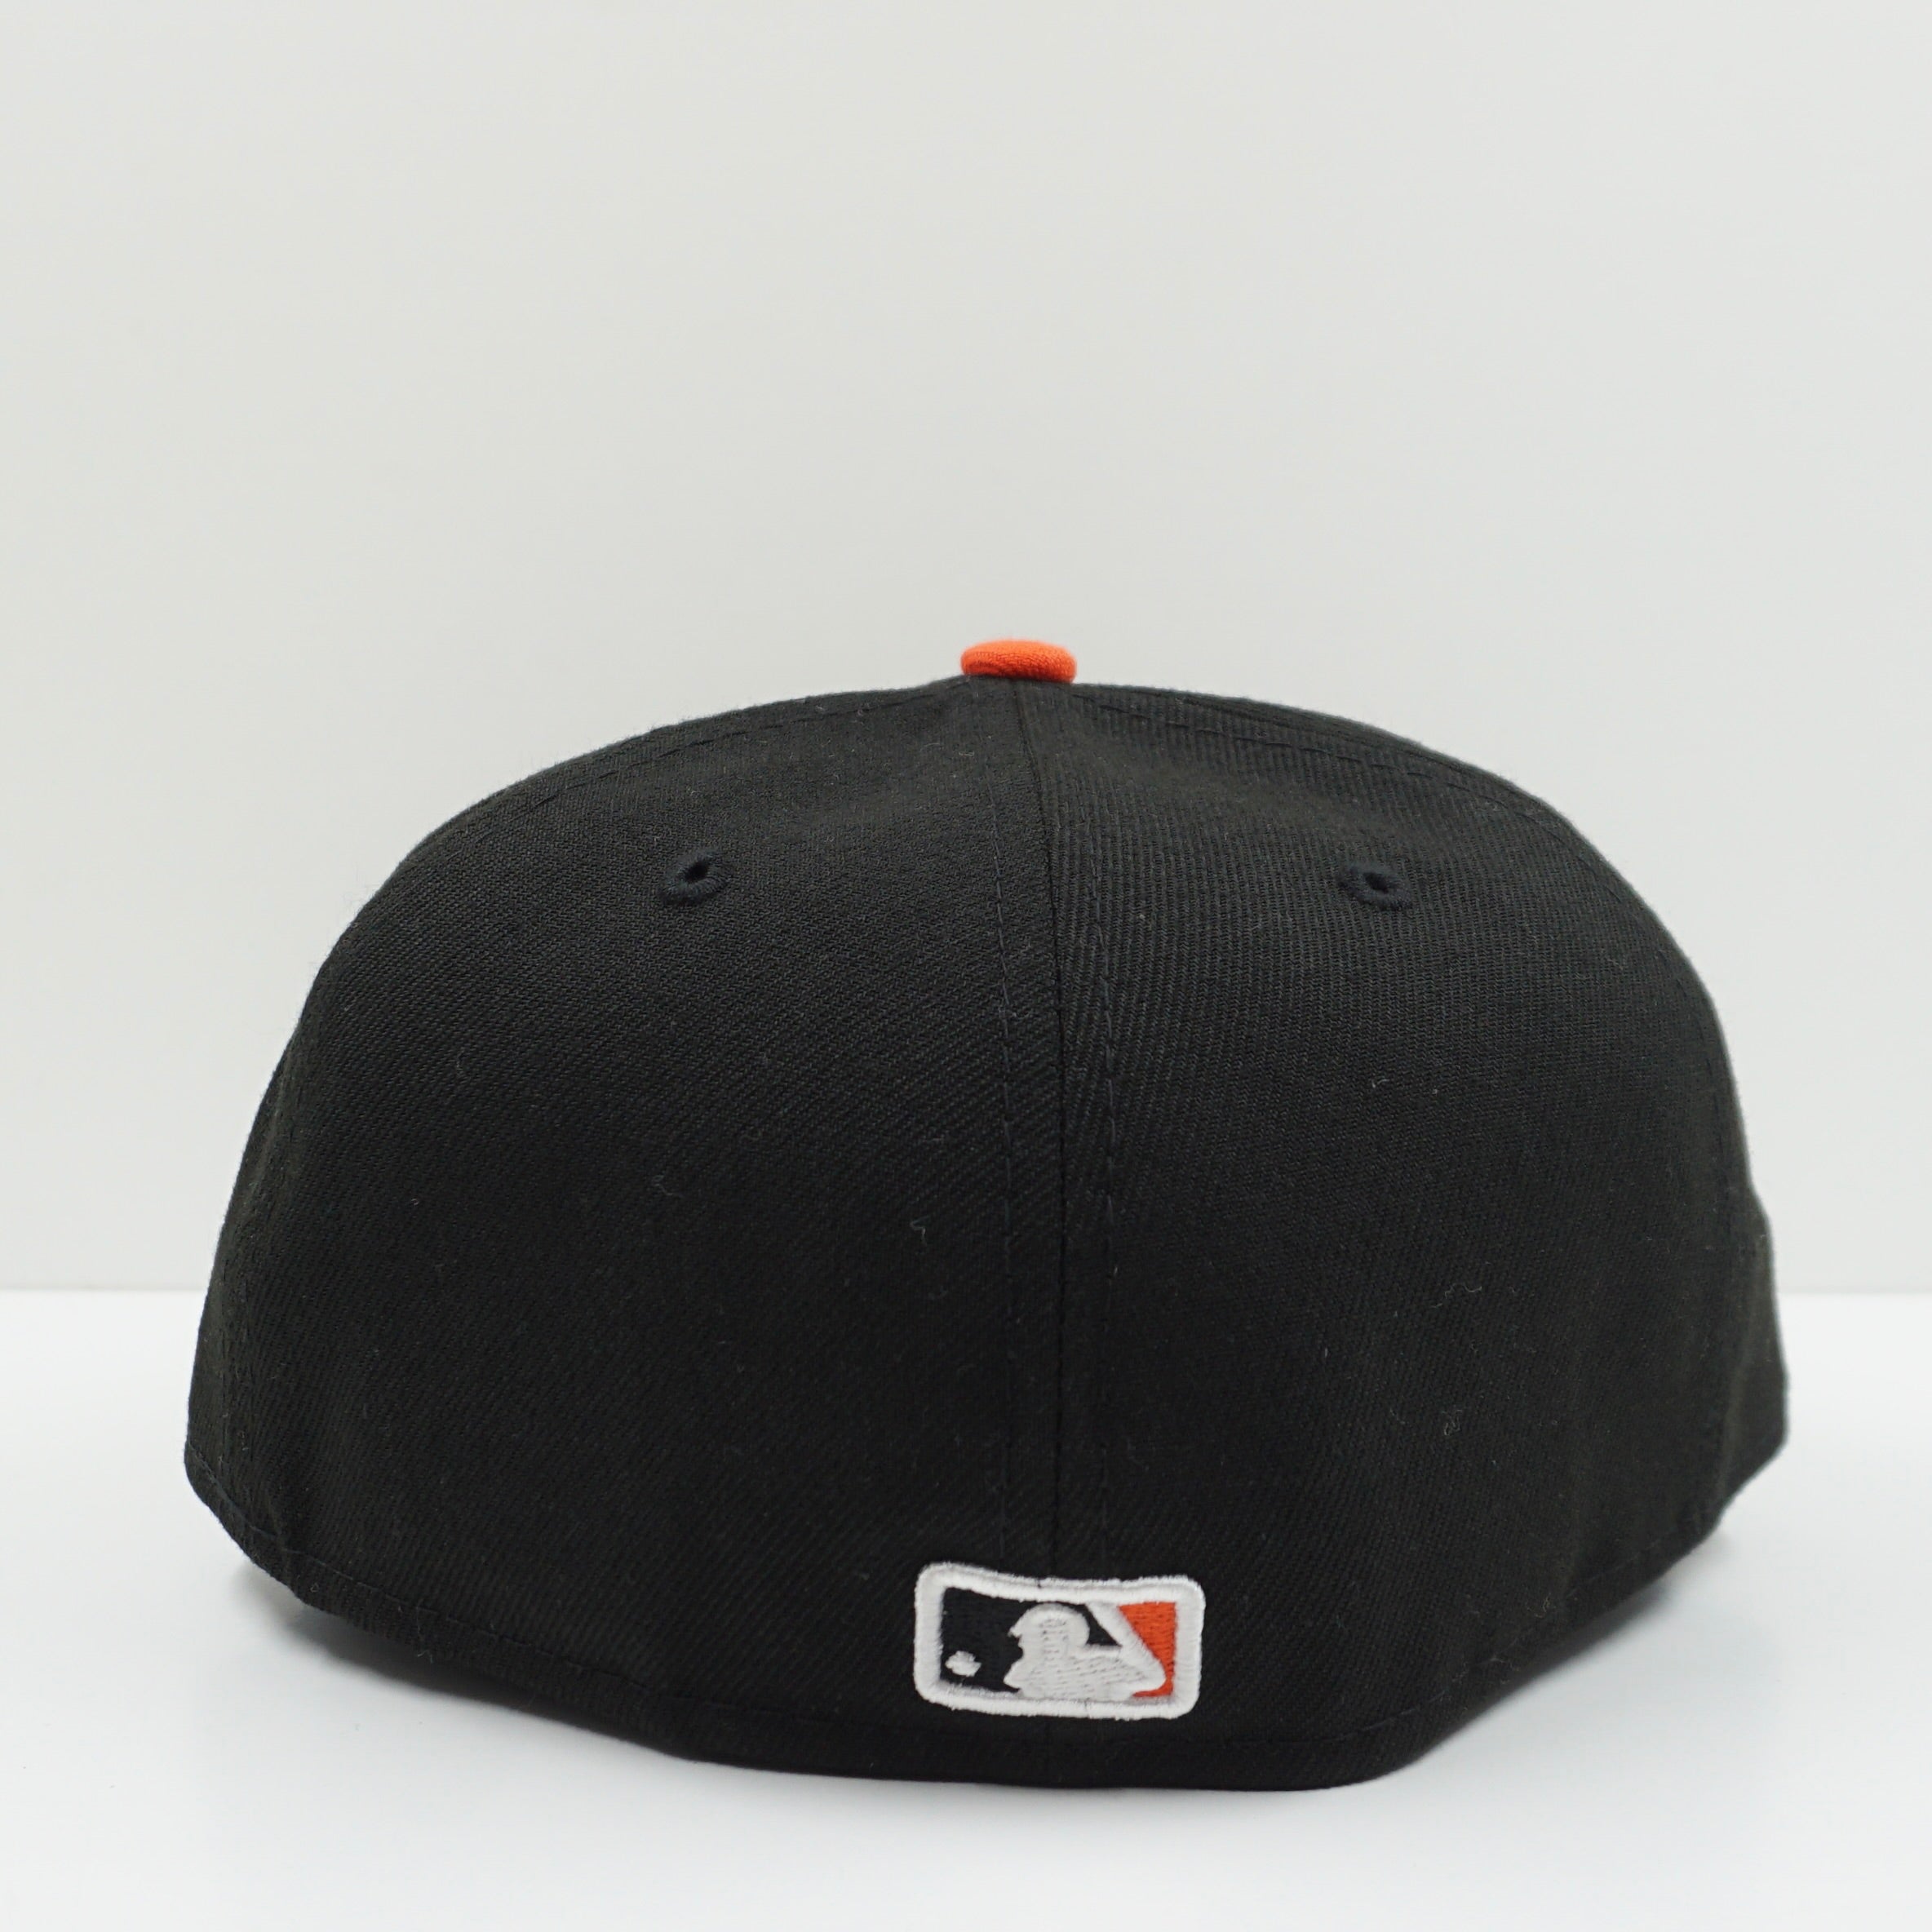 New Era San Francisco Giants Orange/Black Fitted Cap